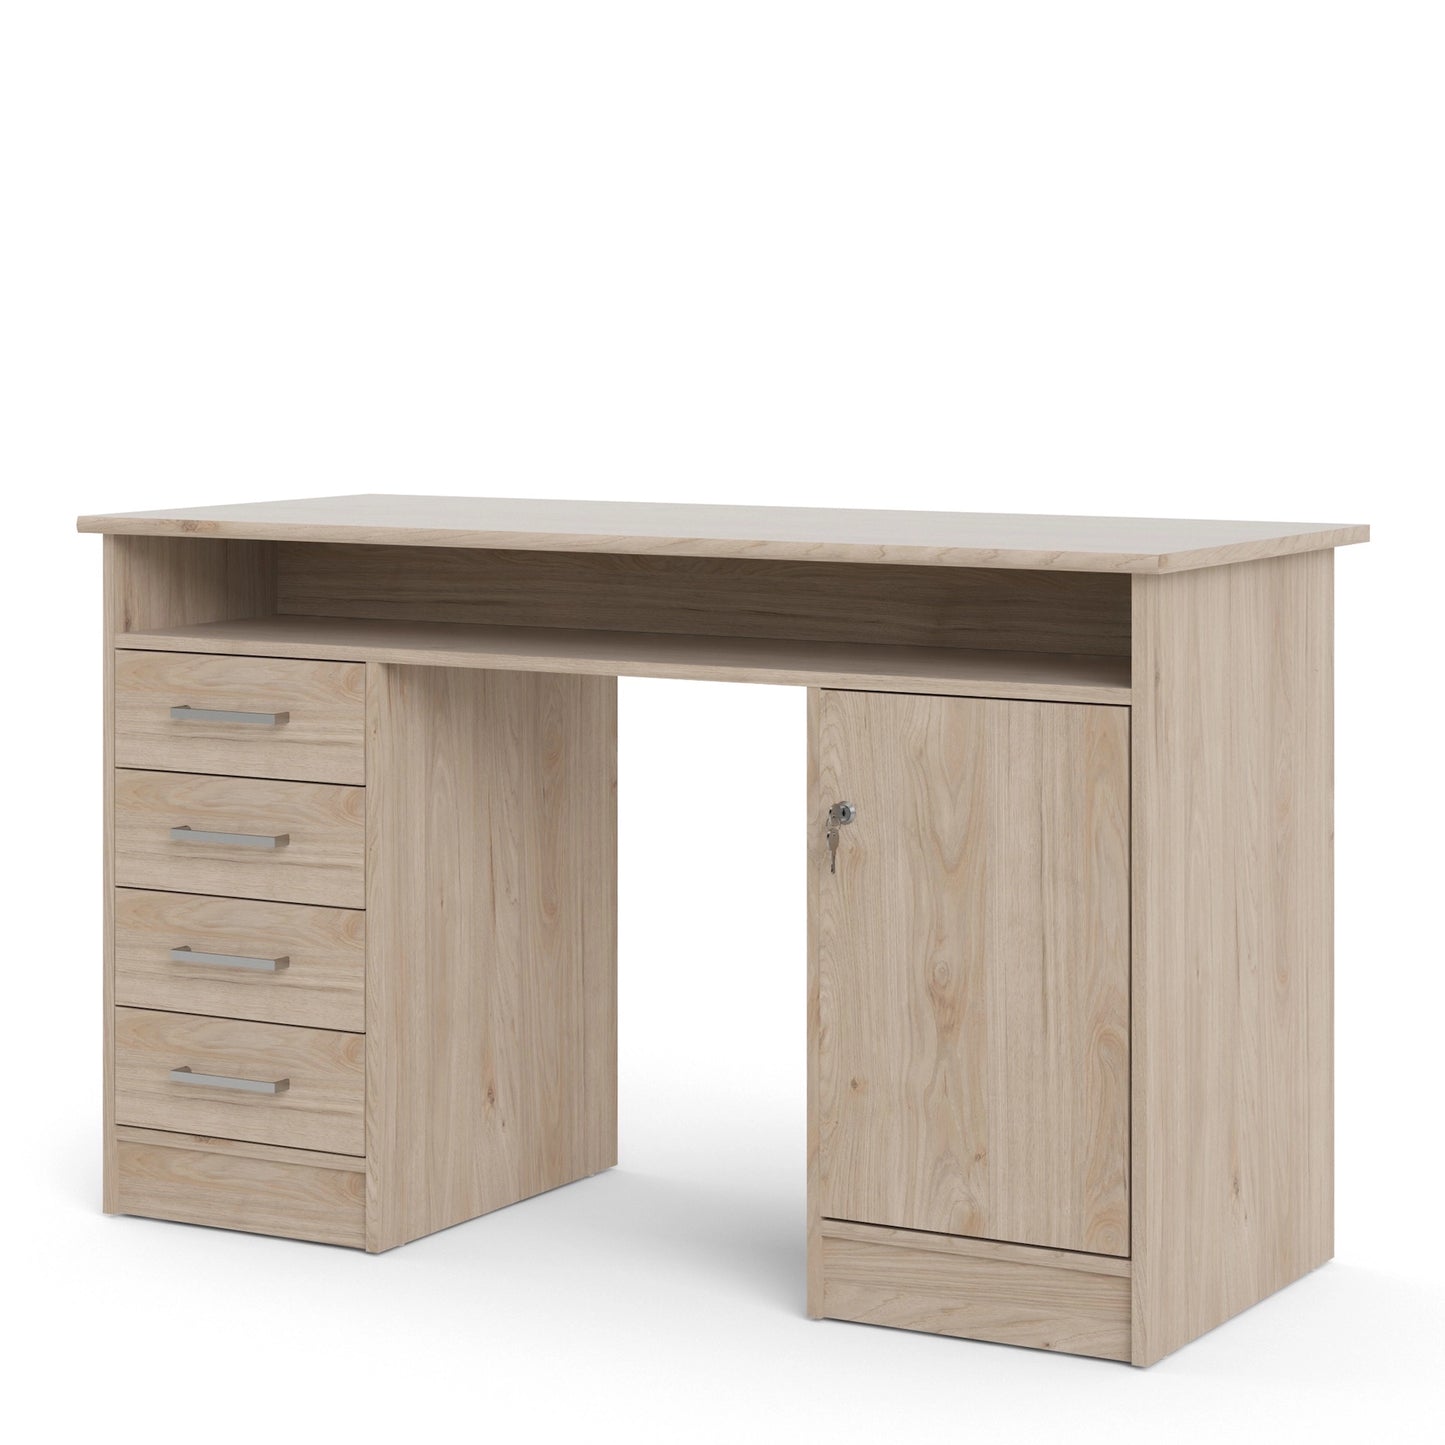 Furniture To Go Function Plus Desk 4 Drawer 1 Door in Jackson Hickory Oak